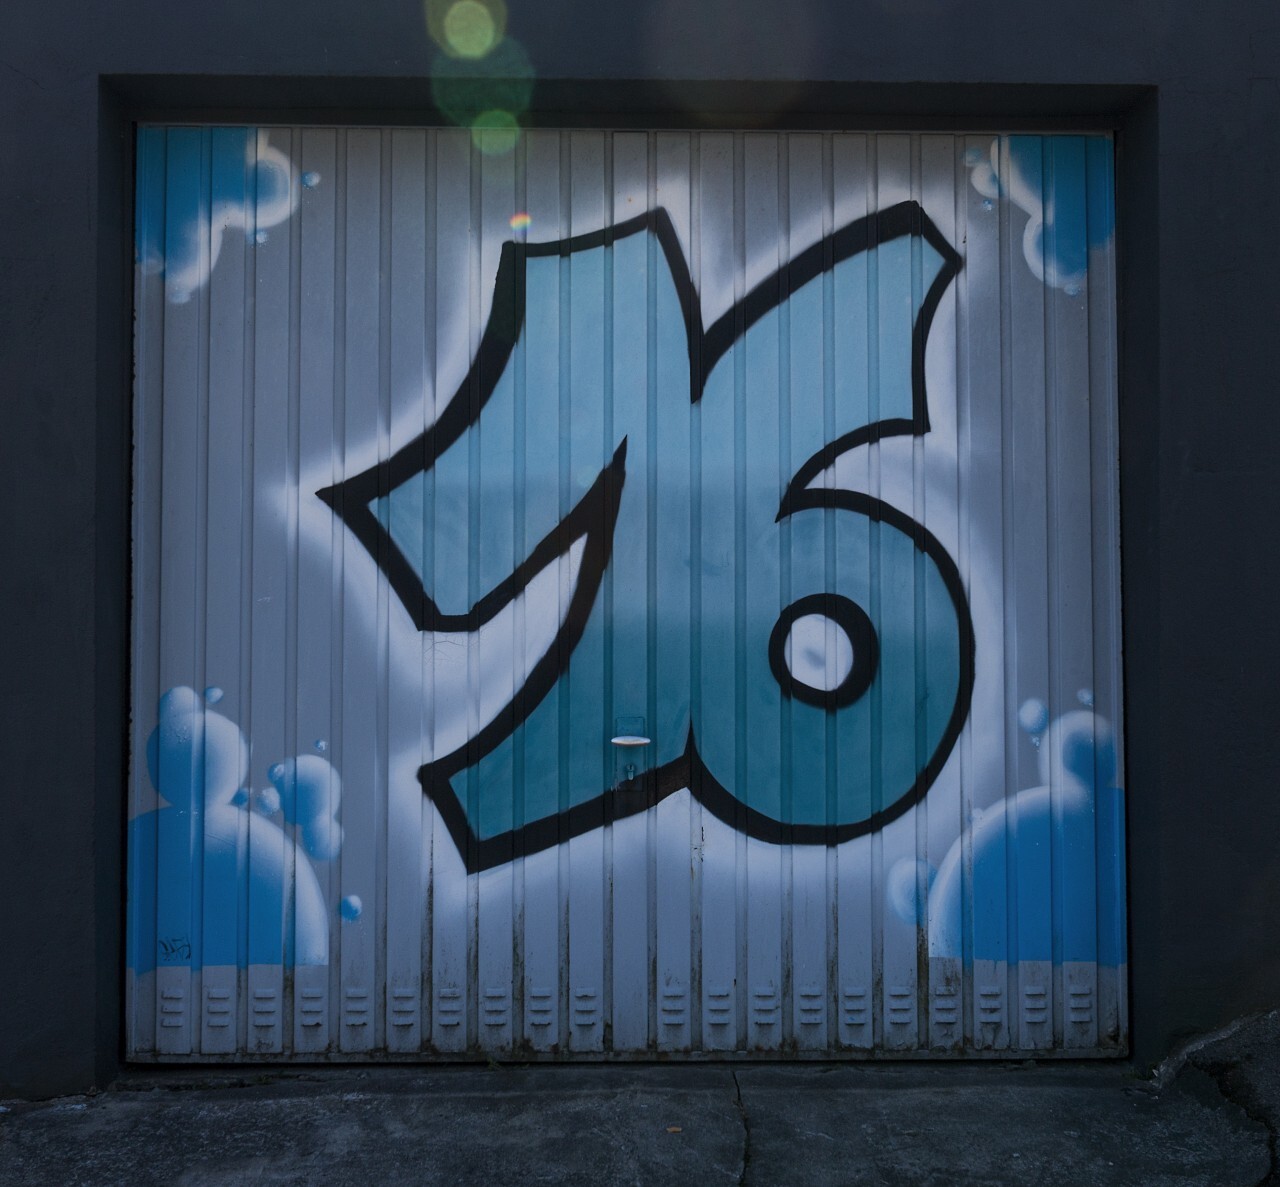 Number 16 graffiti on a garage door